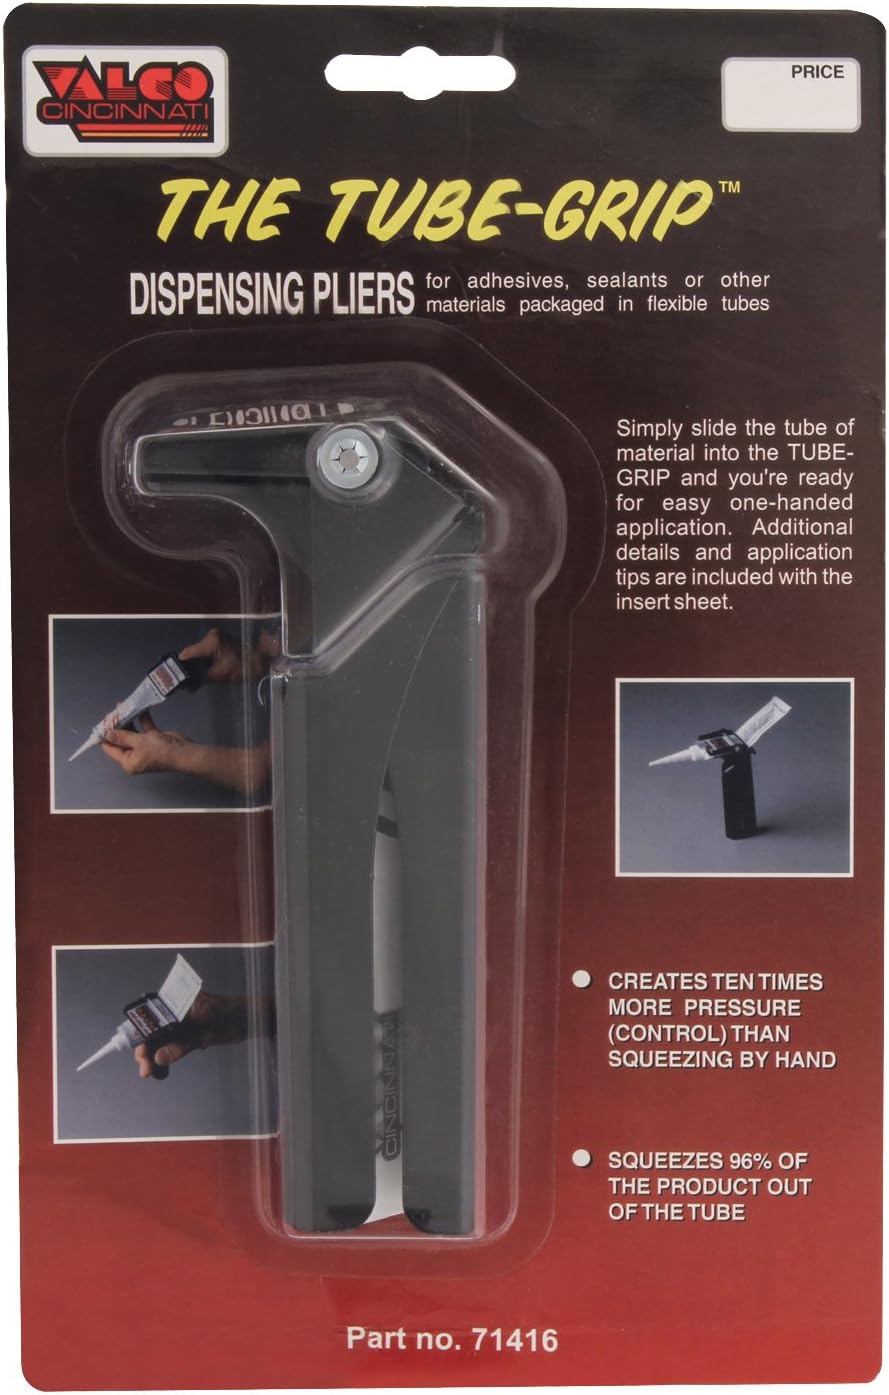 Valco Cincinnati 71416 Tube-Grip 2" Dispensing Plier with Sealant Dispensing Tool